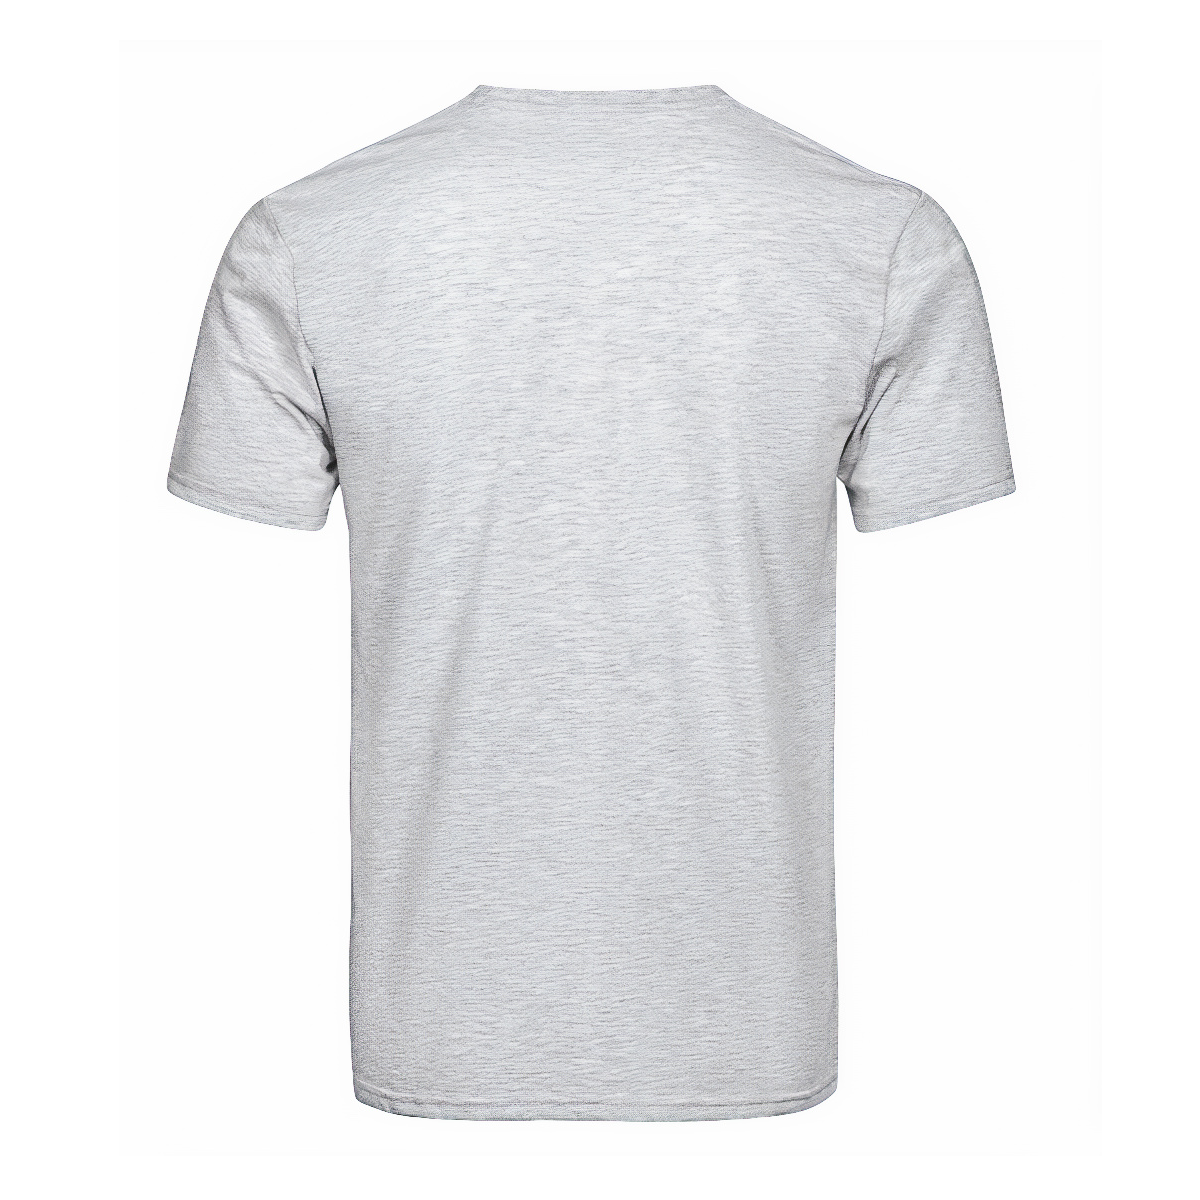 Bannatyne Tartan Crest T-shirt - I'm not yelling style